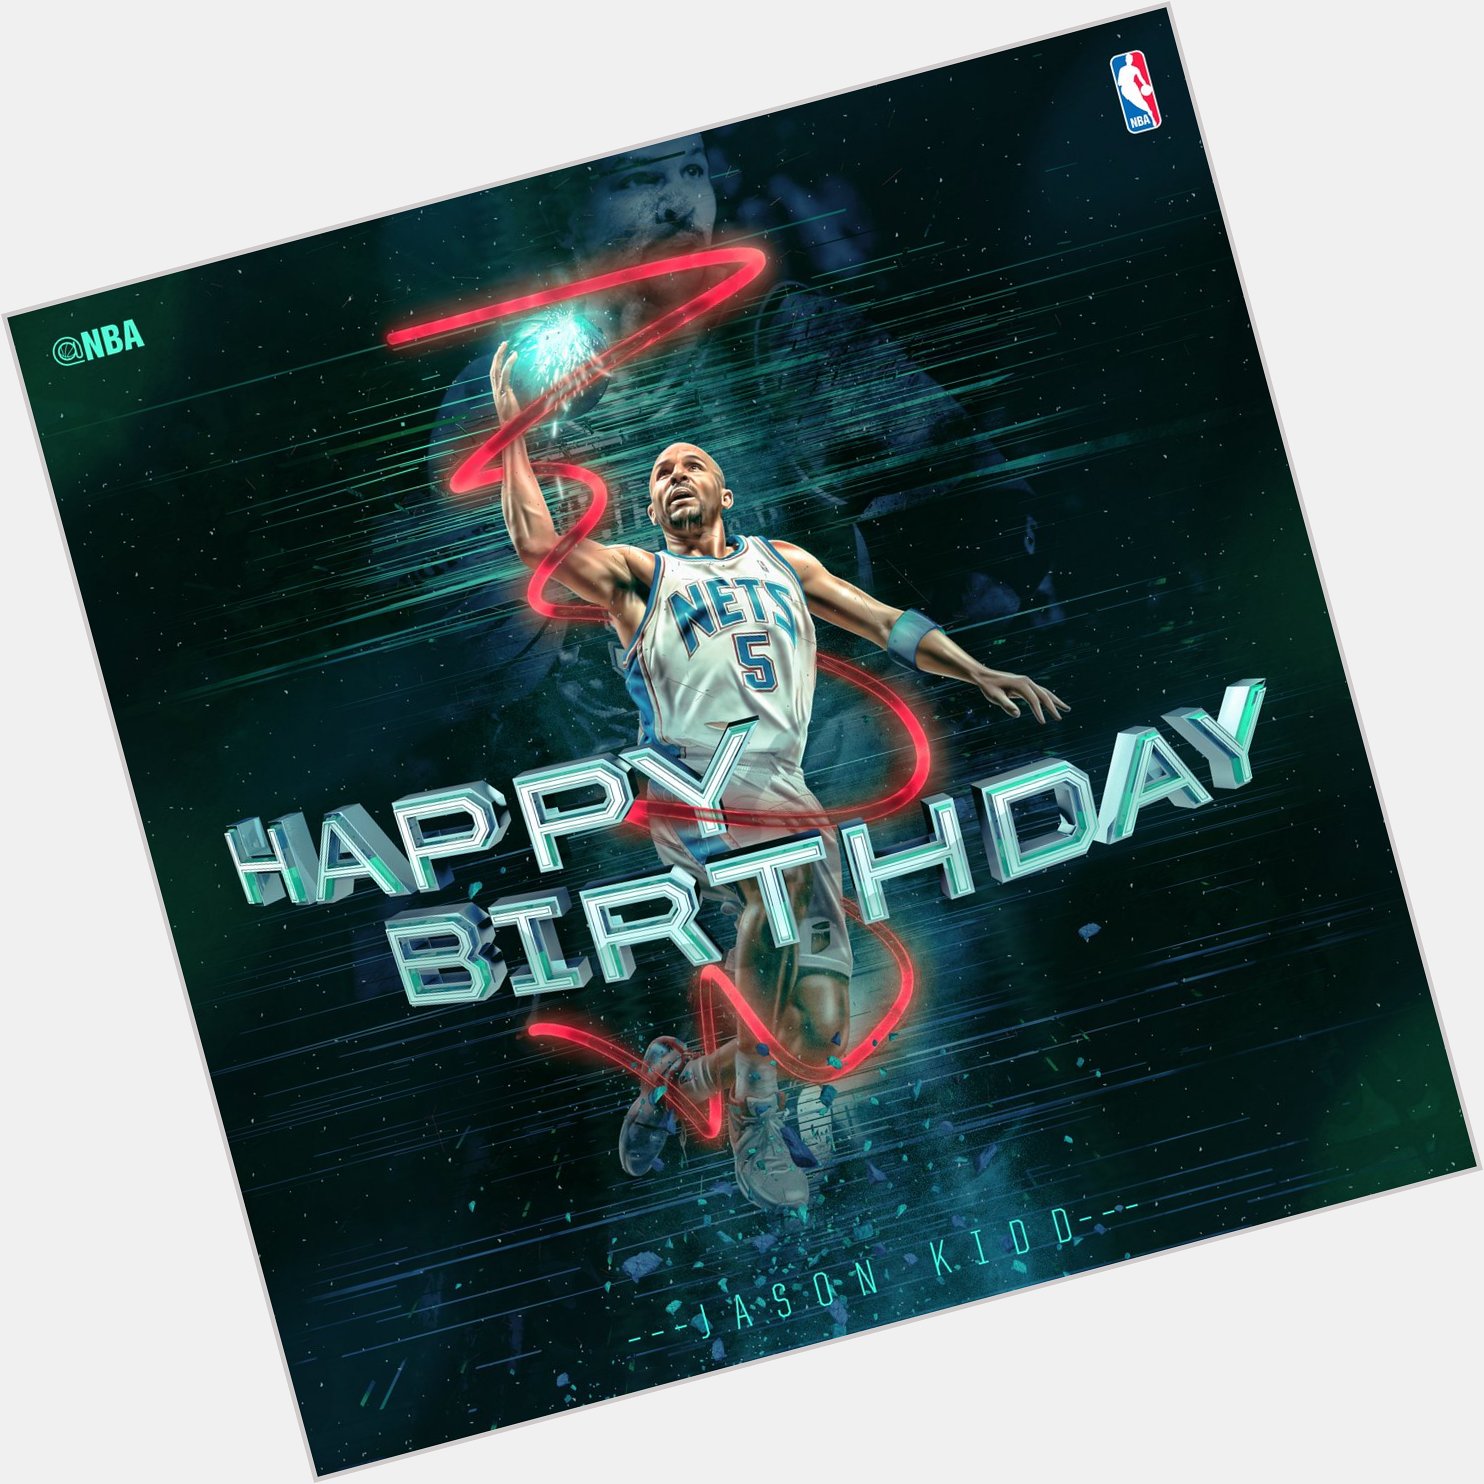  Join us in wishing NBA legend & coach JASON KIDD a HAPPY 44th BIRTHDAY! 